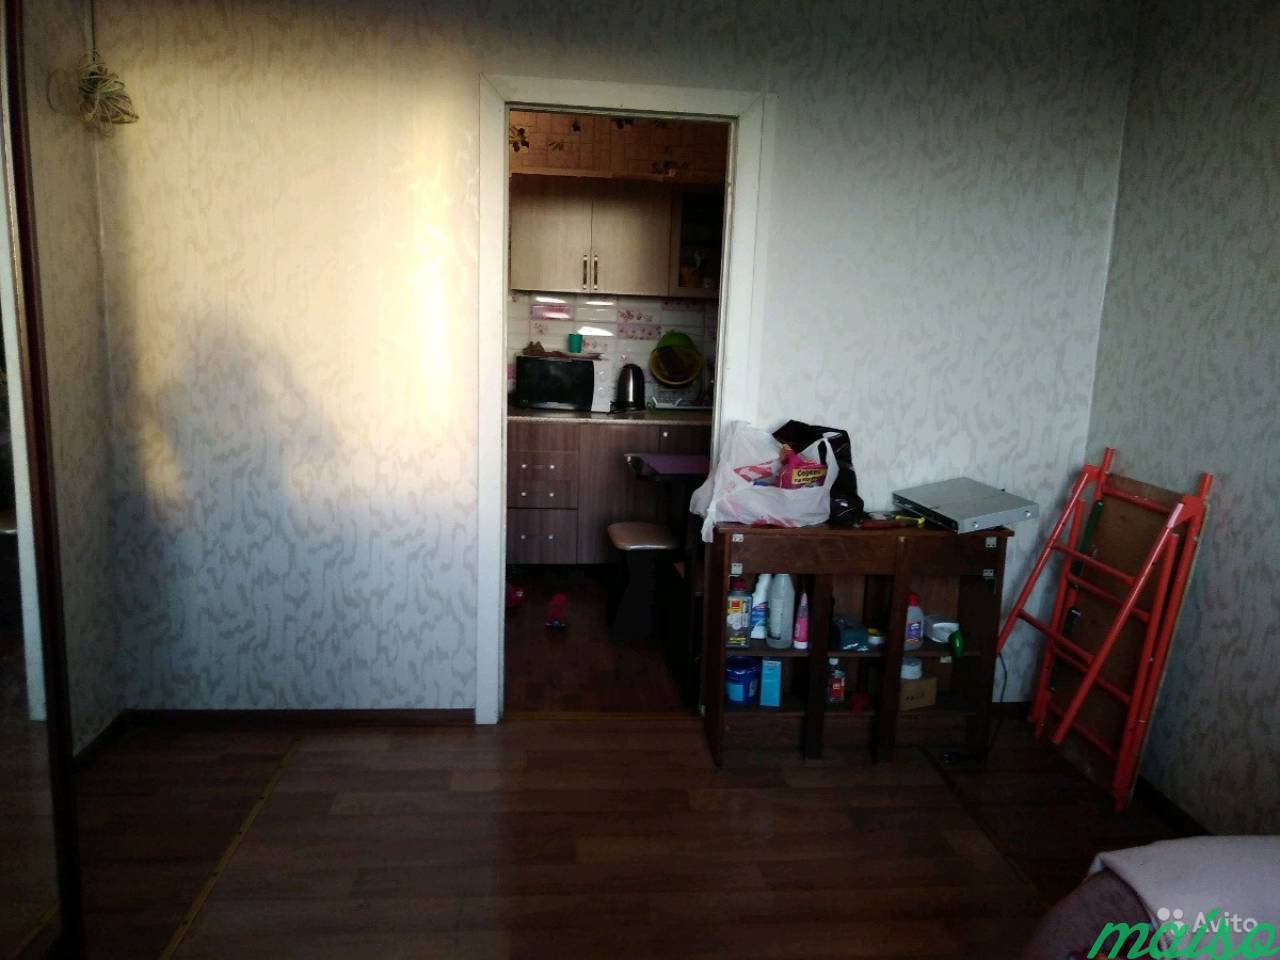 Комната 18.3 м² в >, 9-к, 5/5 эт. в Санкт-Петербурге. Фото 4